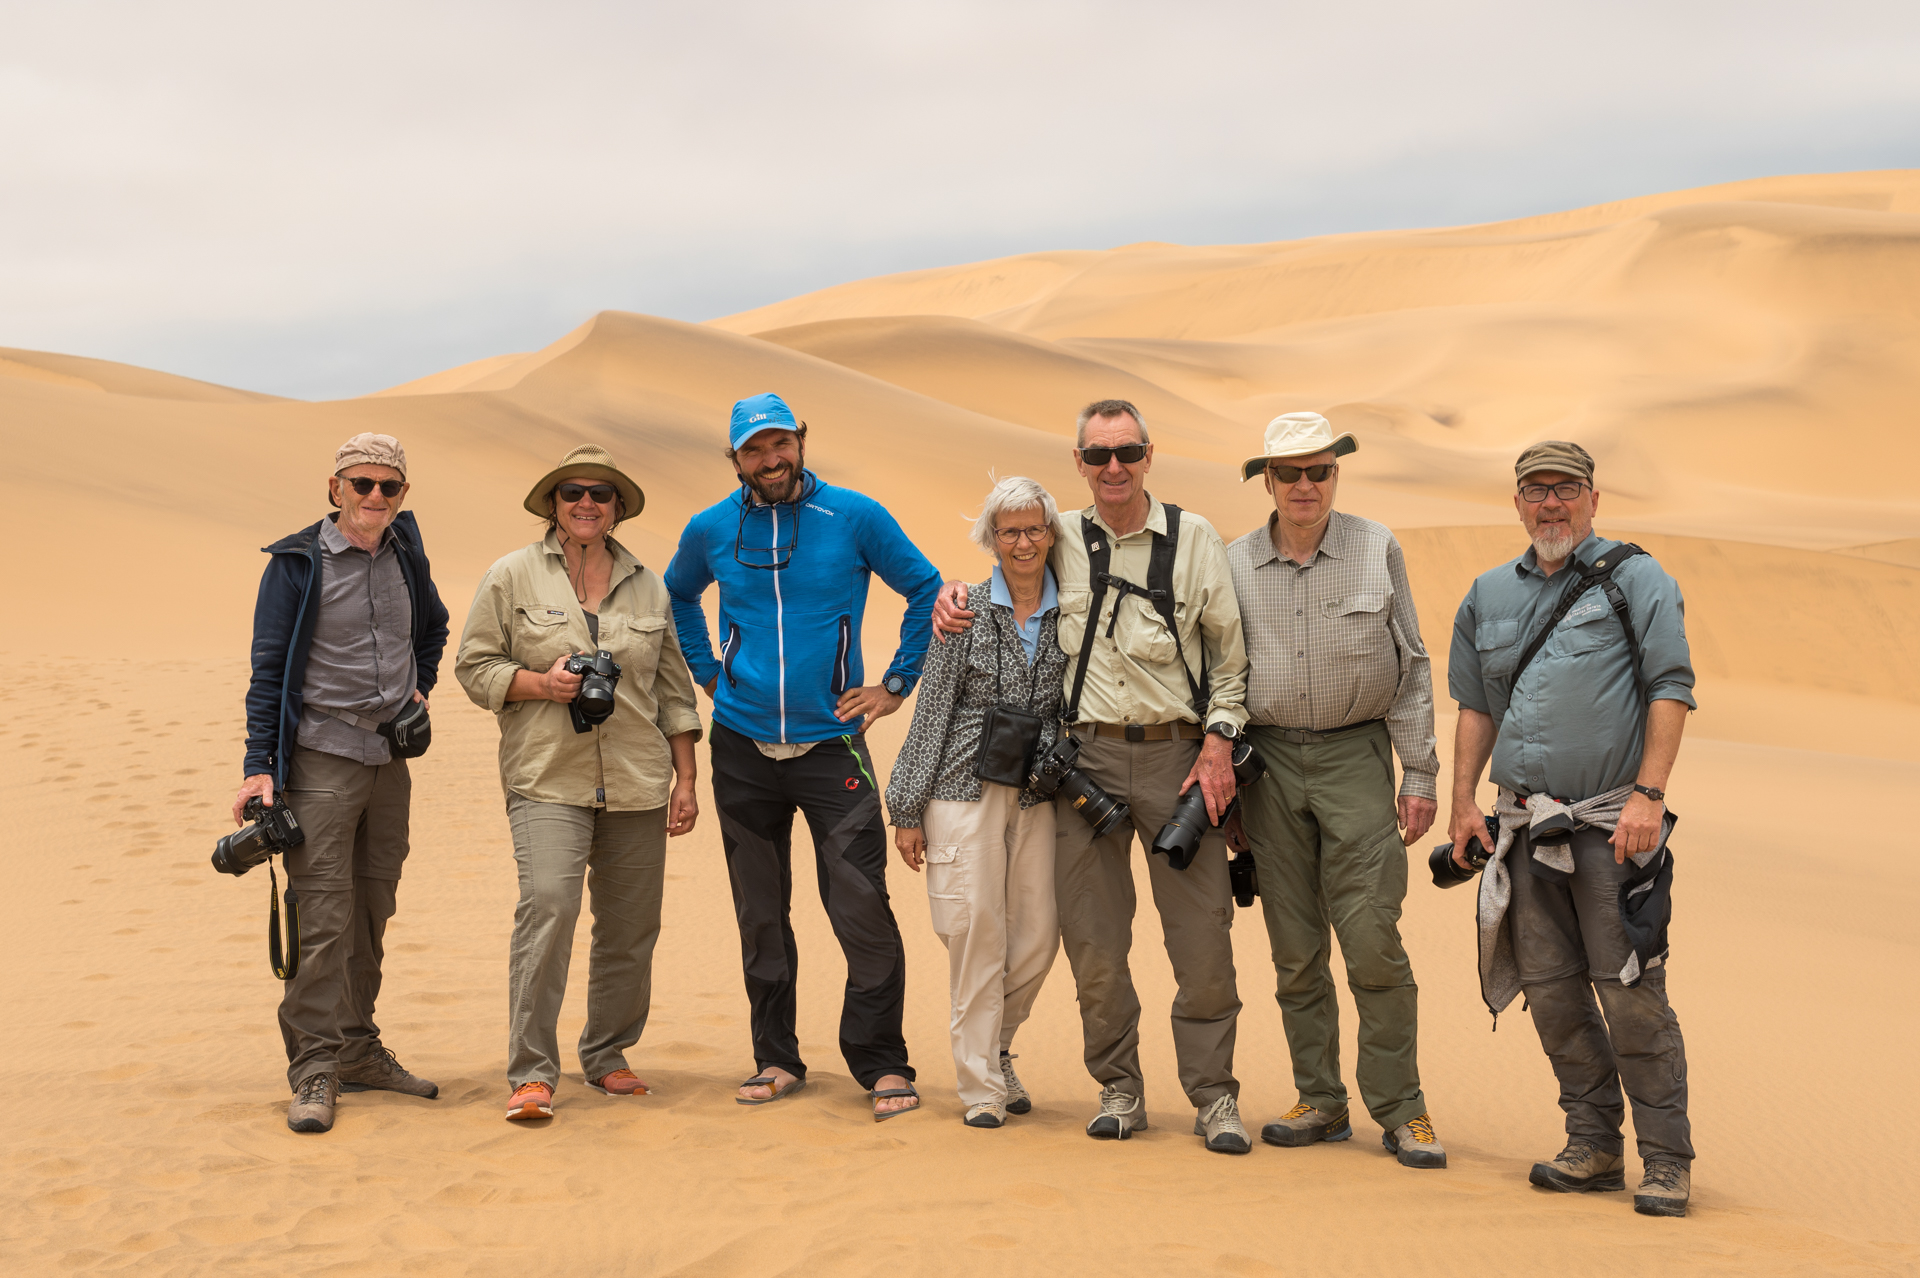 Gruppenfoto in den Dünen in Namibia.